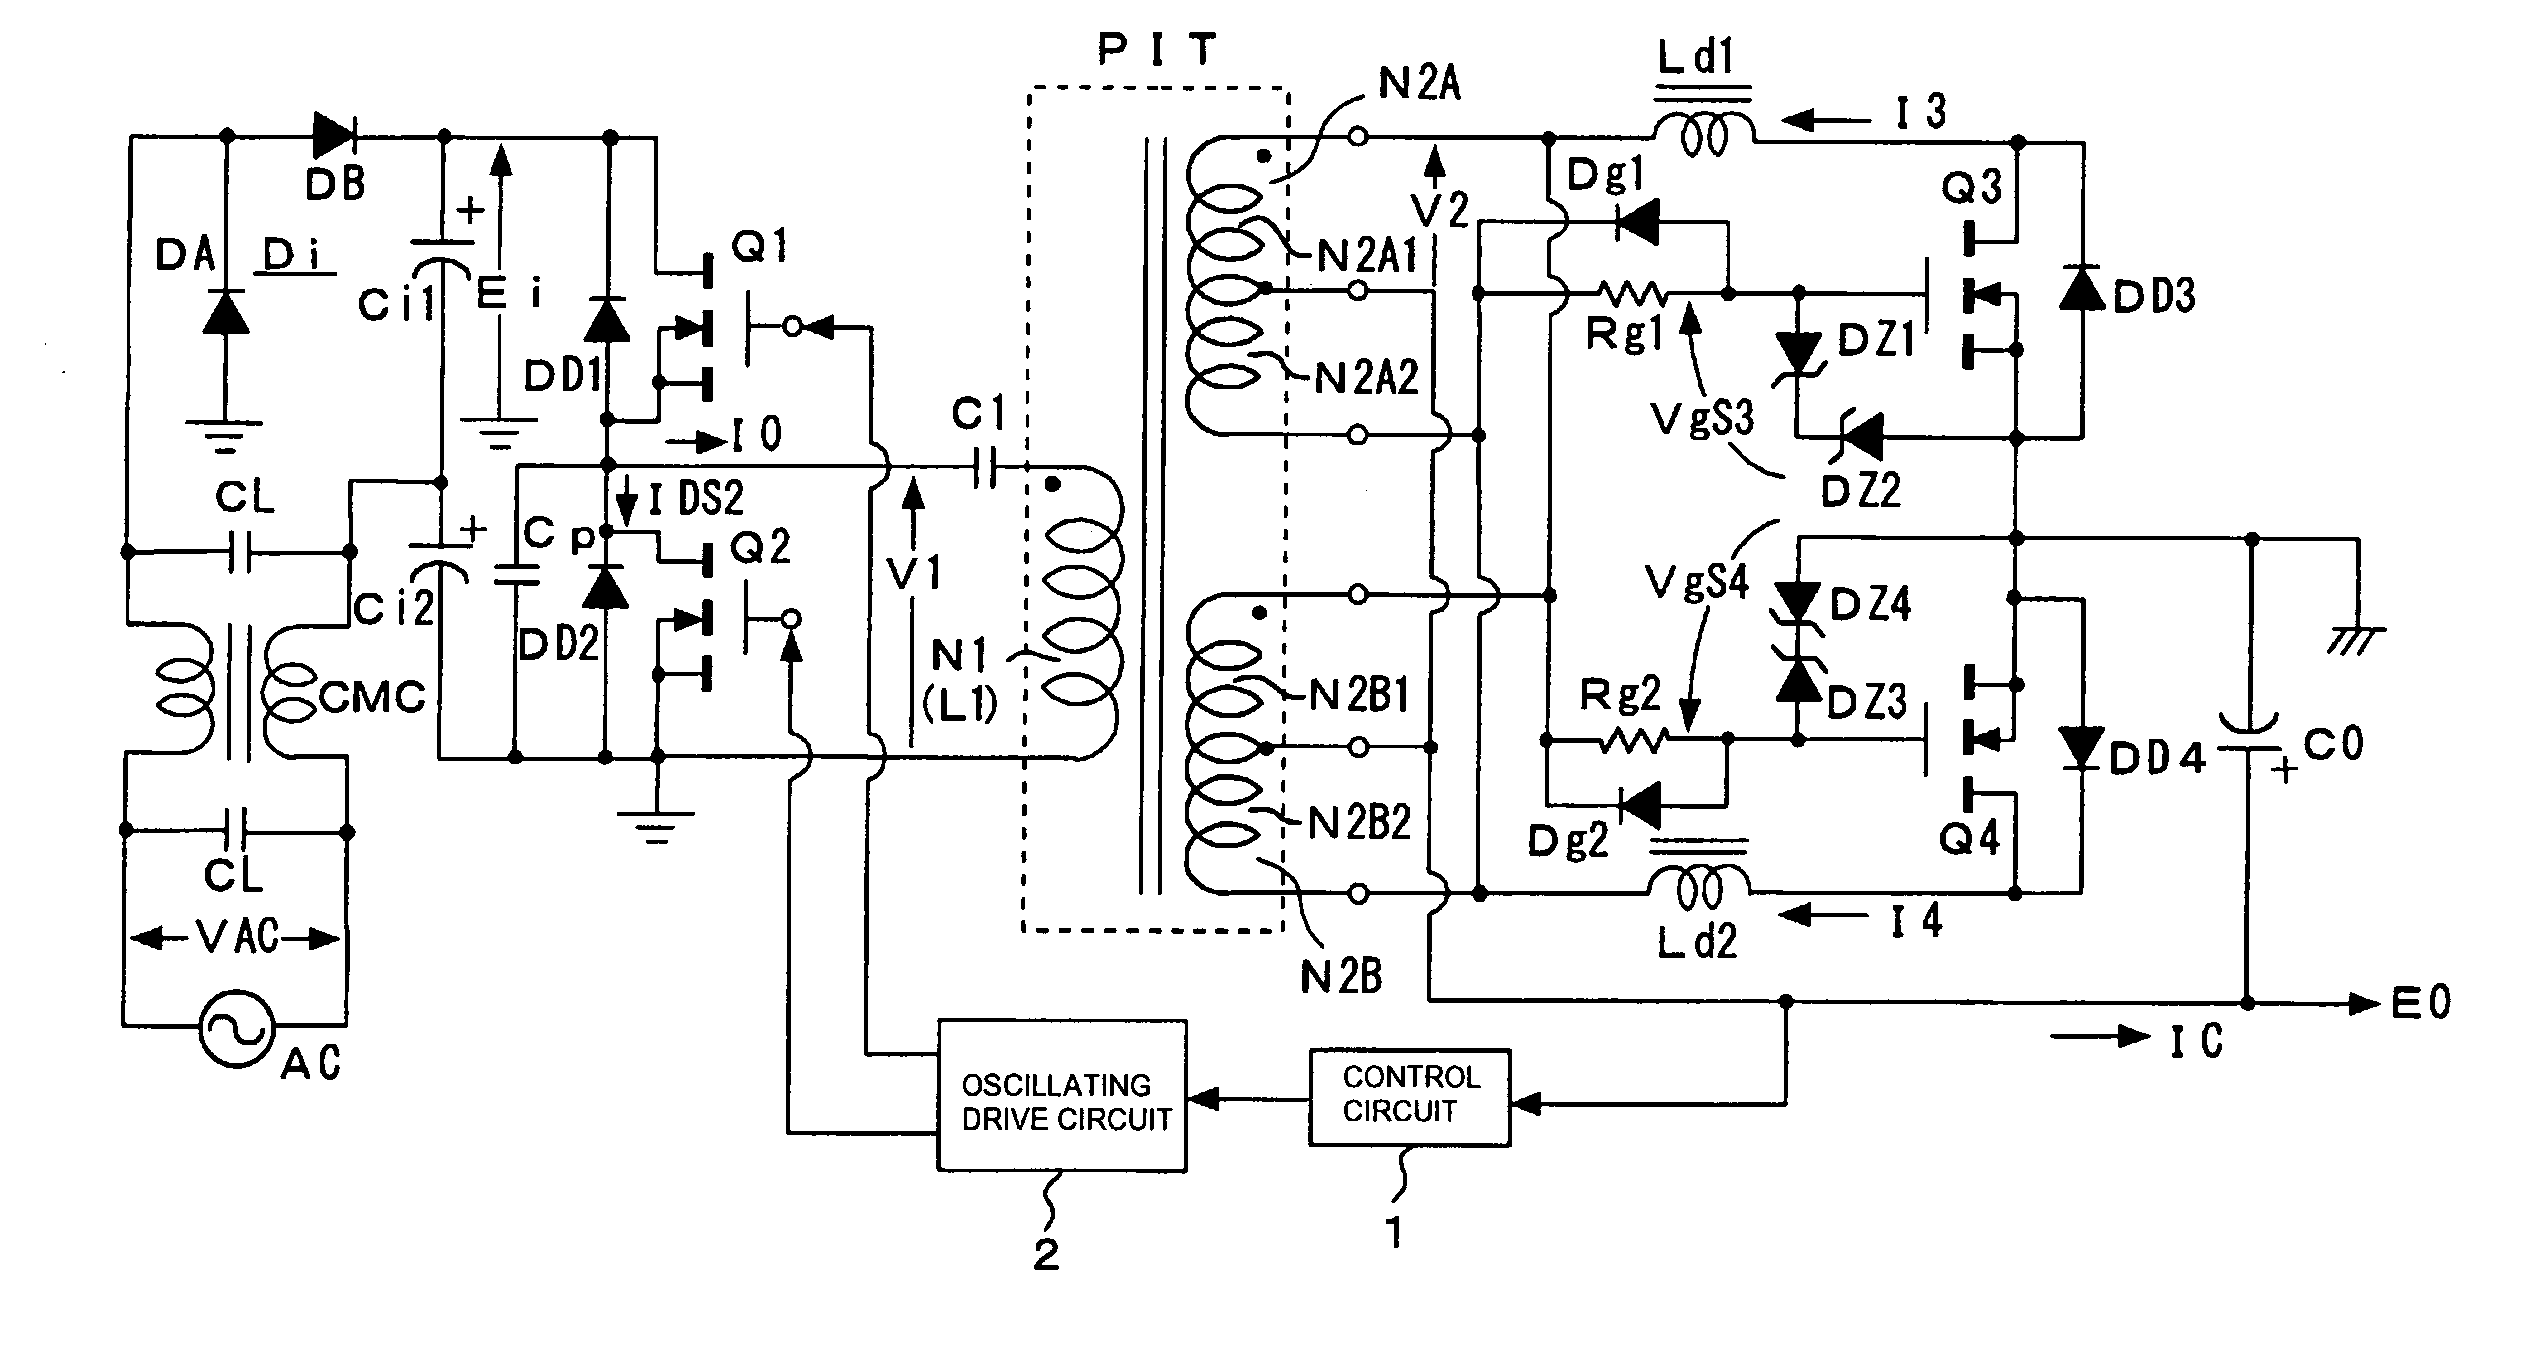 Switching power circuit